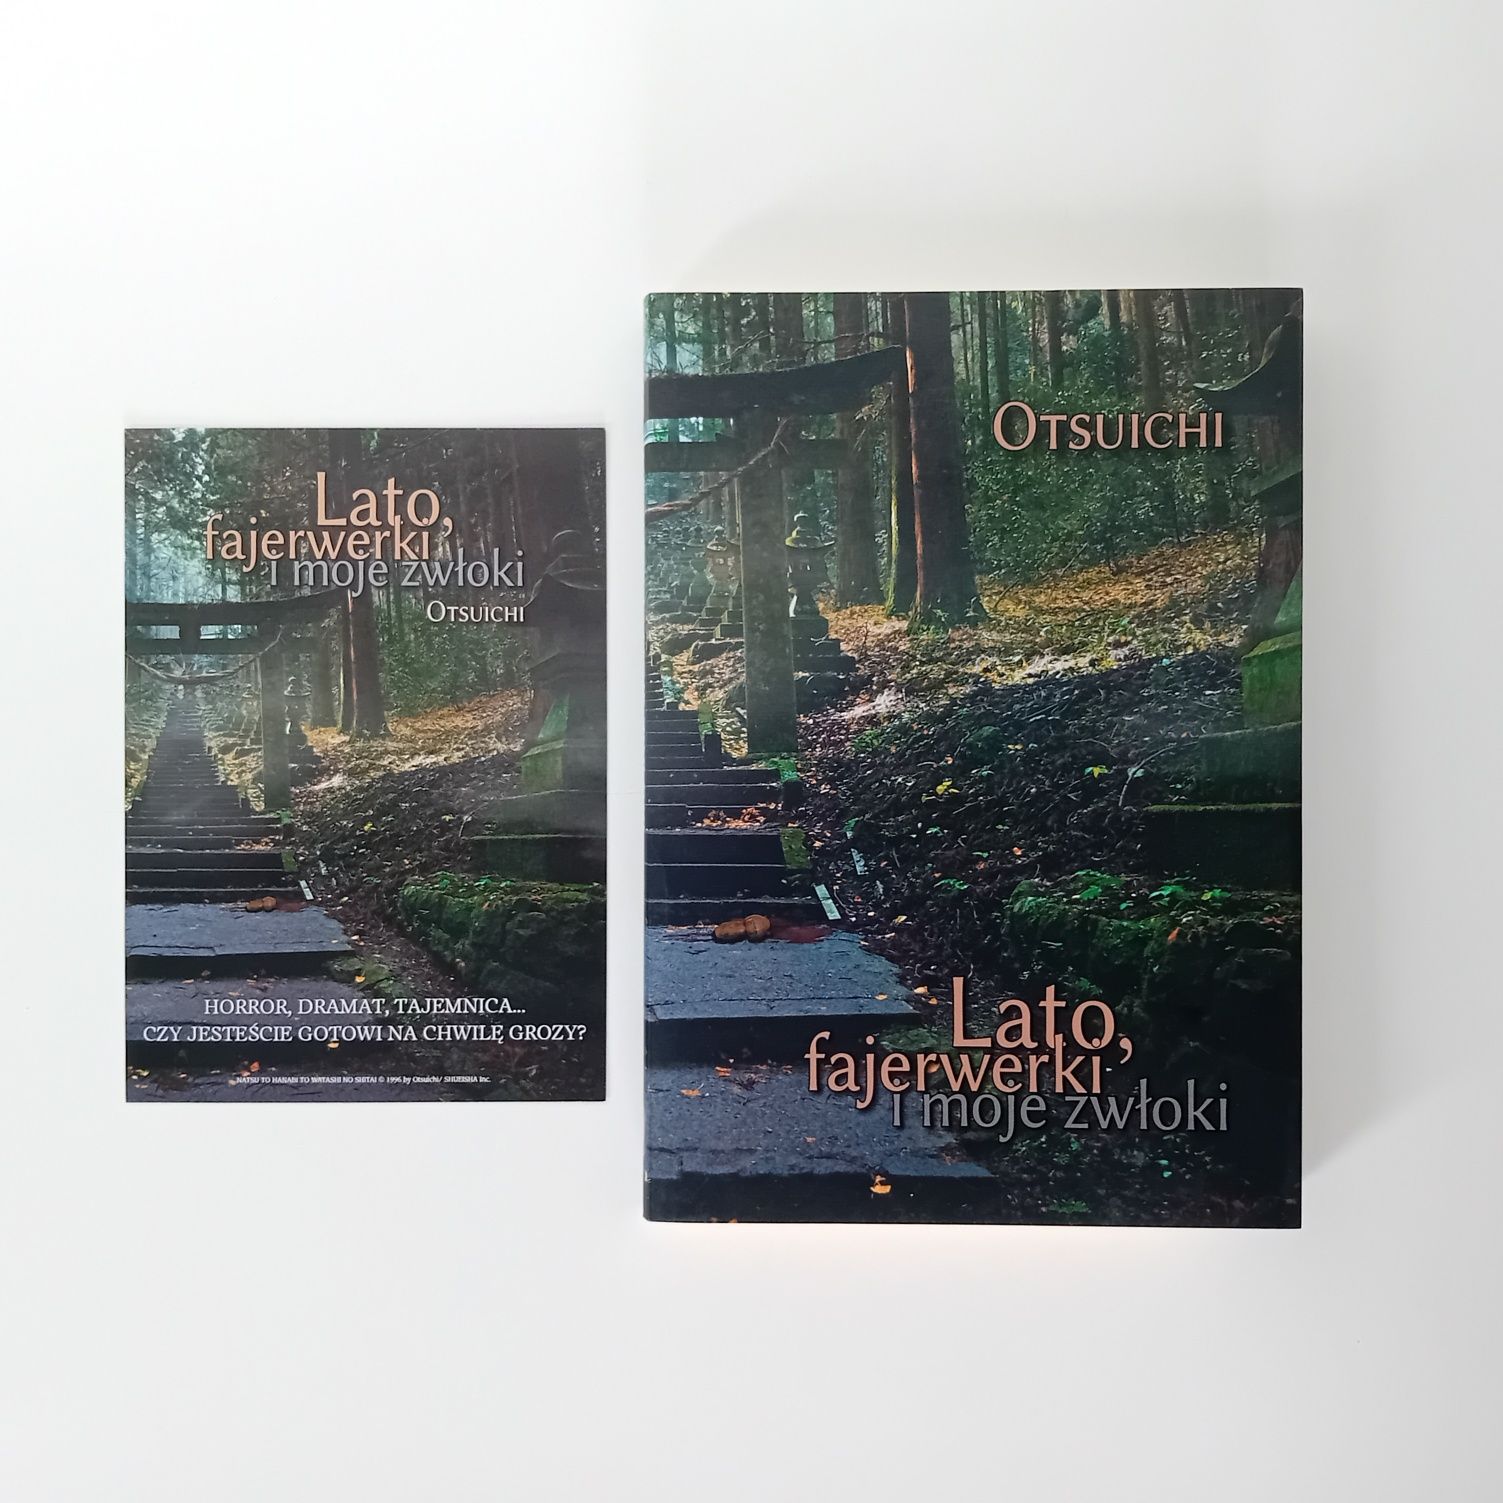 Lato, fajerwerki i moje zwłoki + ulotka manga light novel LN Waneko